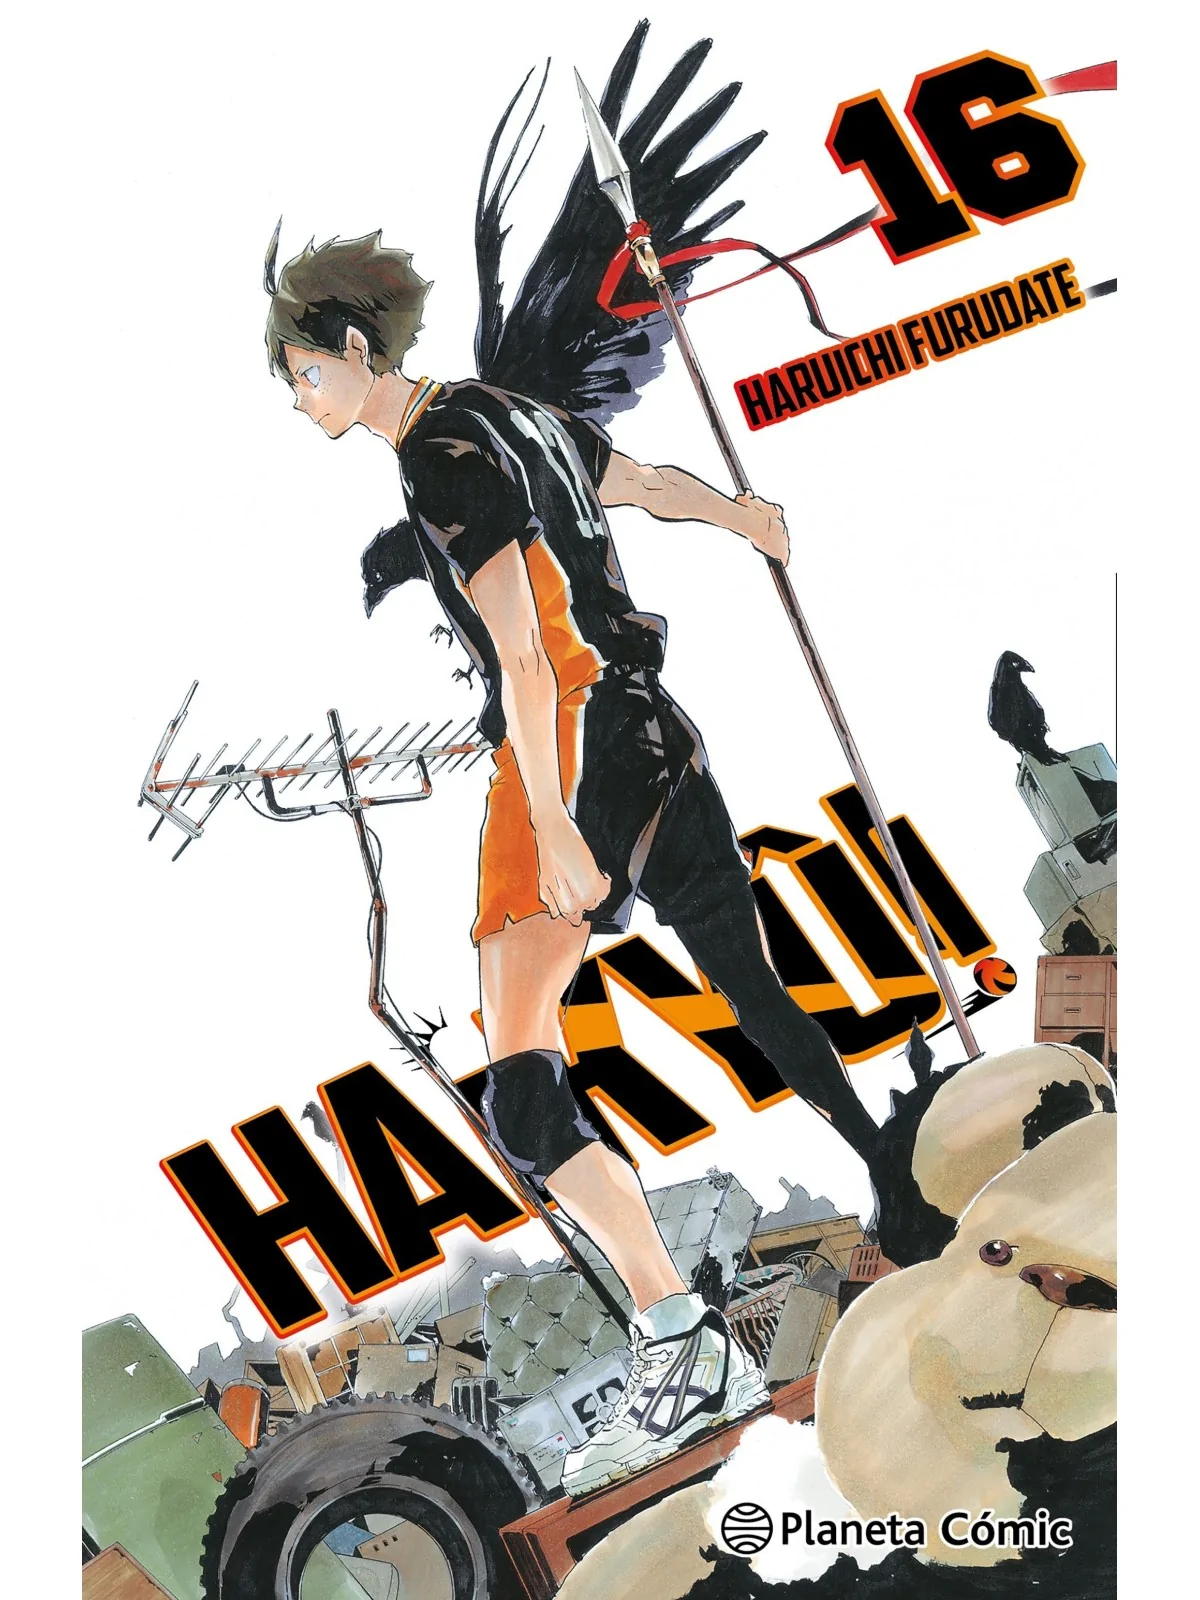 Comprar Haikyû!! Nº 16 barato al mejor precio 8,07 € de Planeta Comic